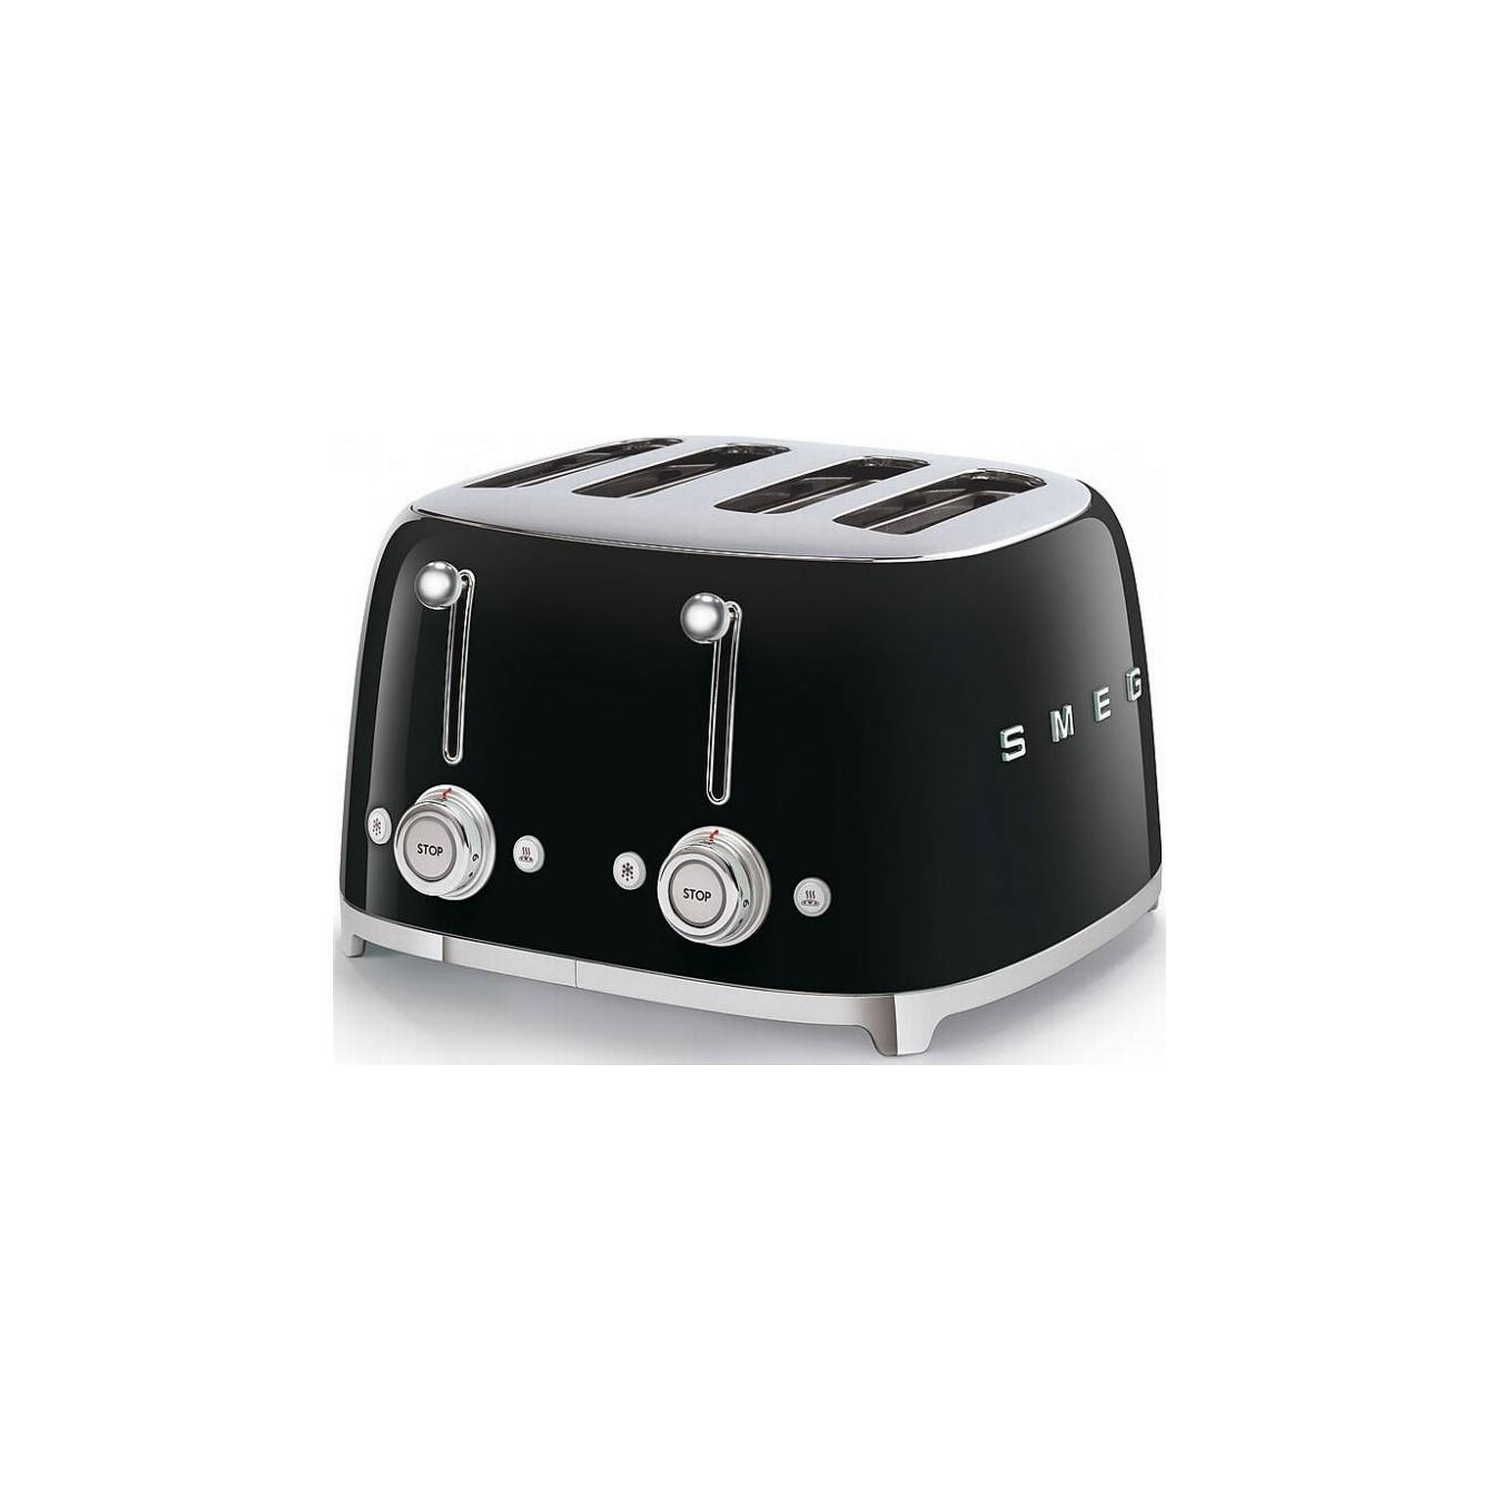 Smeg 4 Slice Toaster Range - Various Colours Available - 4